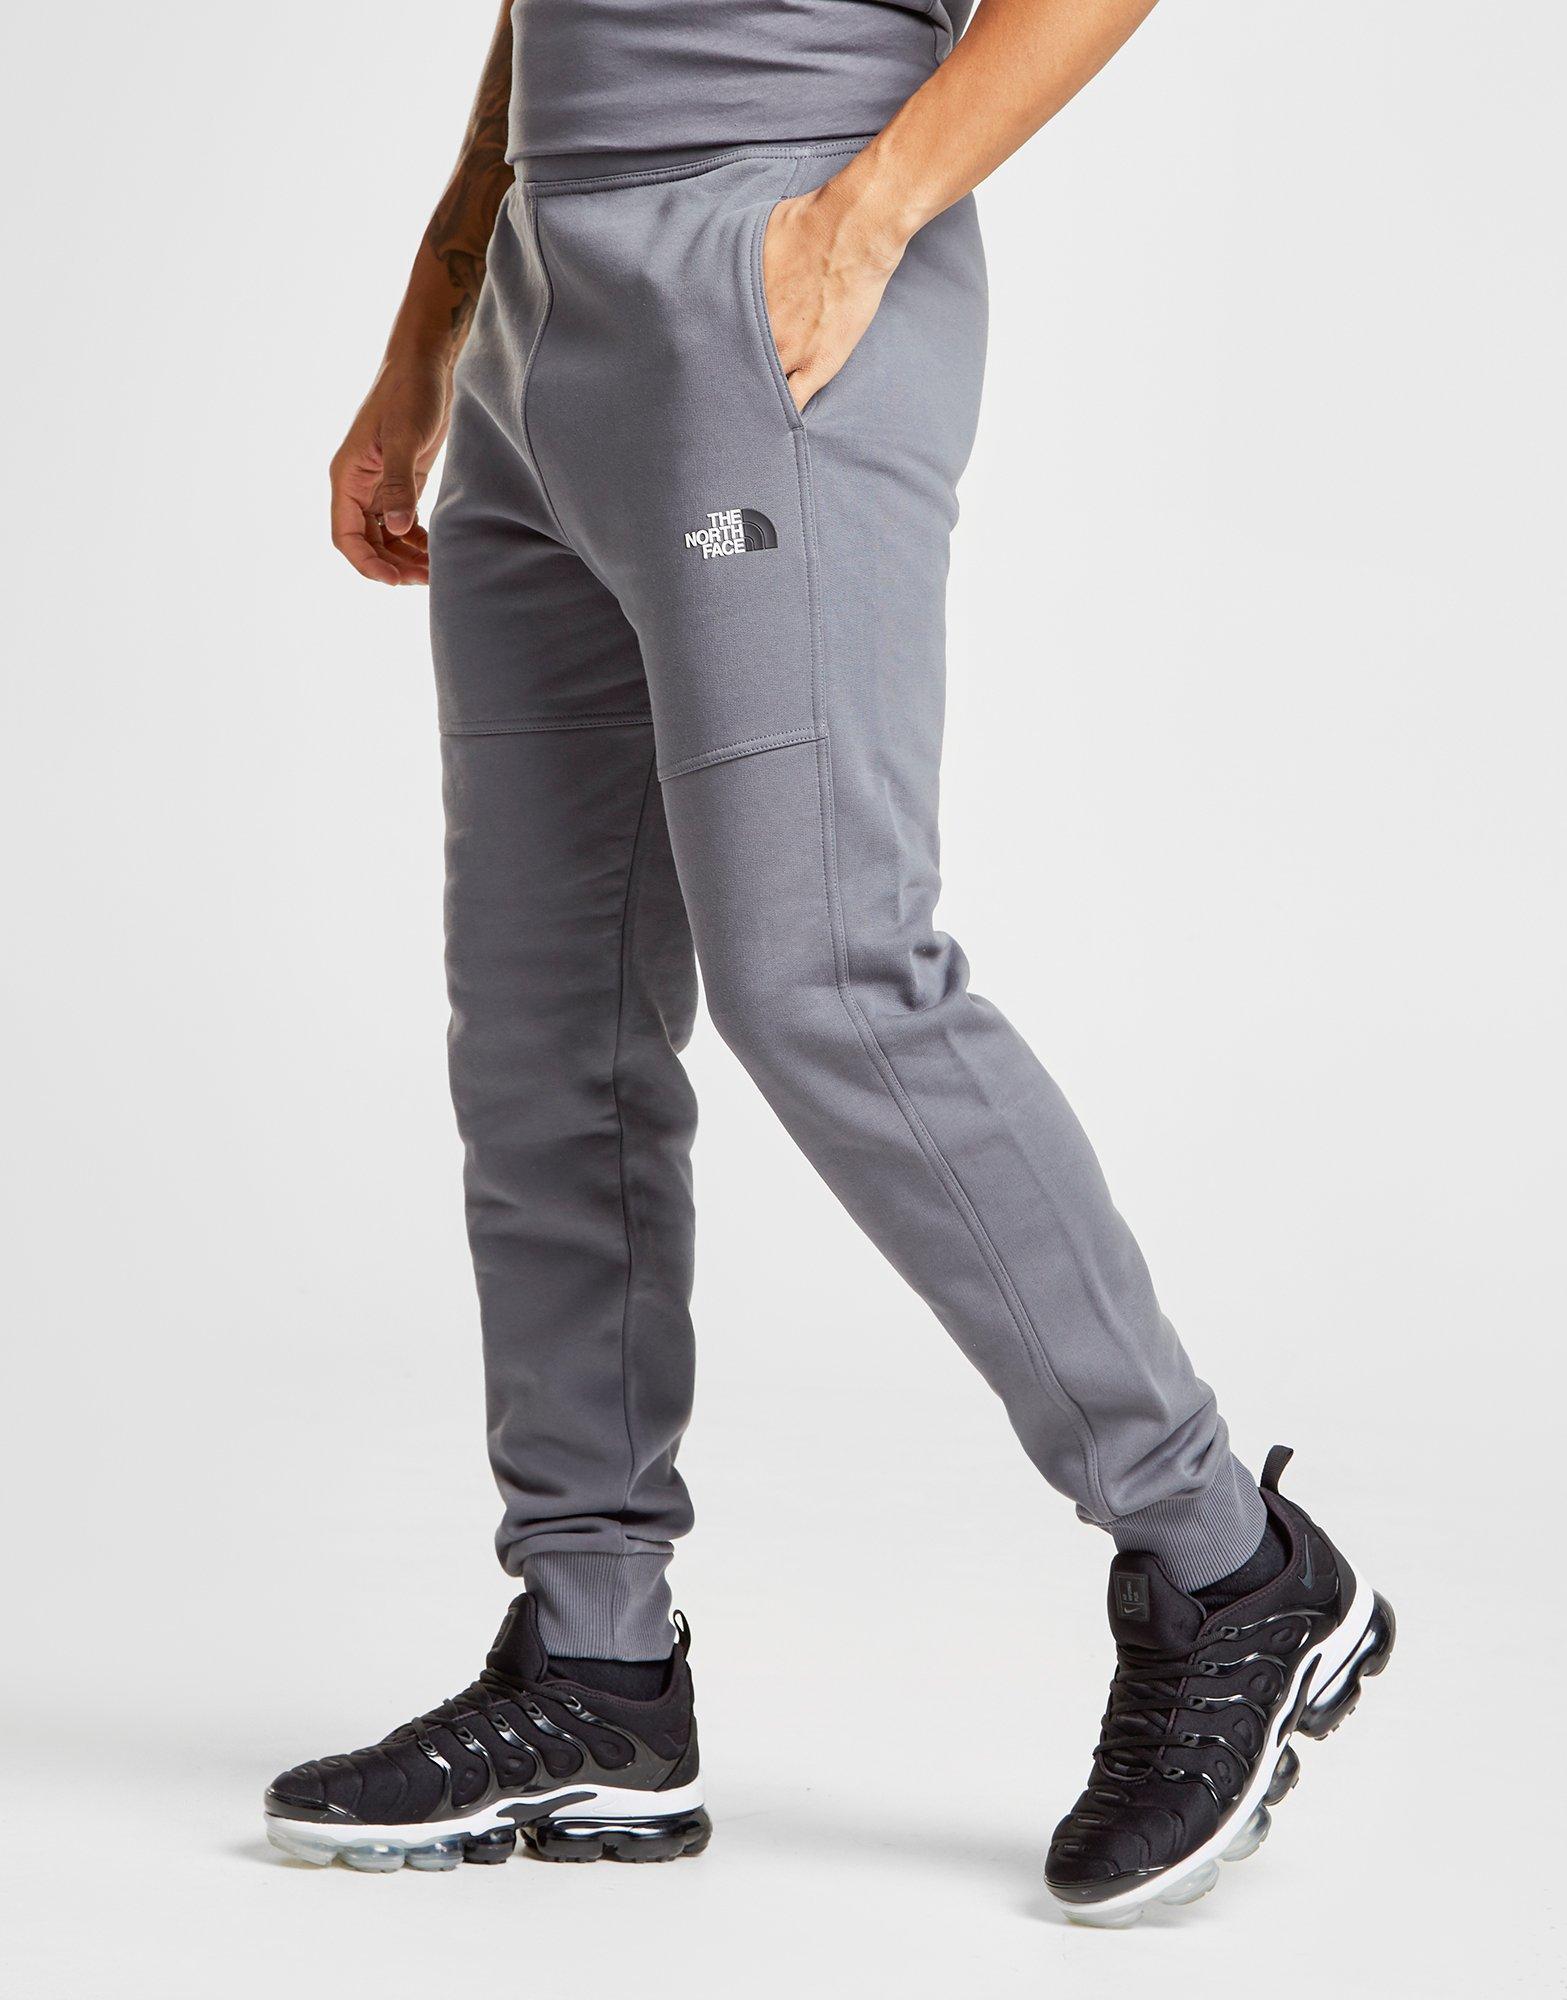 The North Face Bondi Fleece Track Pants in Gray for Men - Lyst